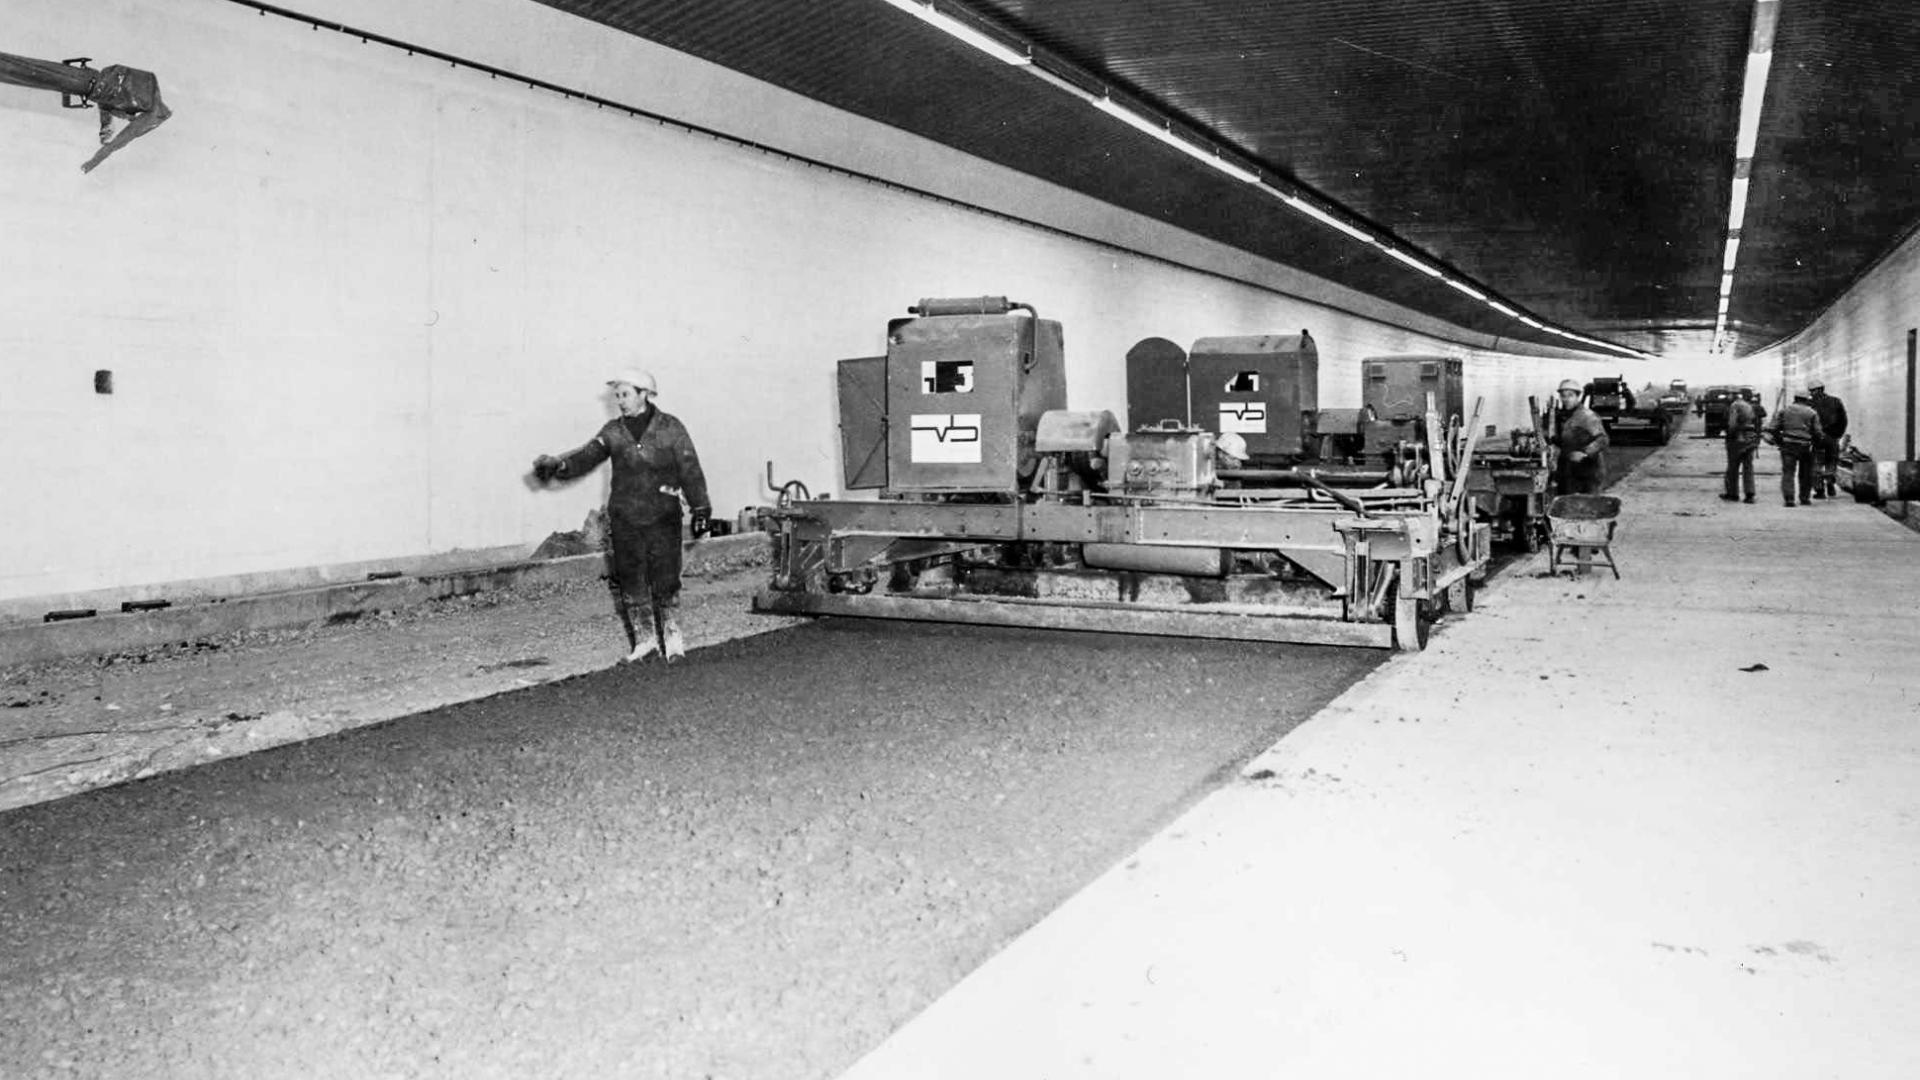 KT - blik in de historie - aanleg wegverharding in tunnel maart 1969